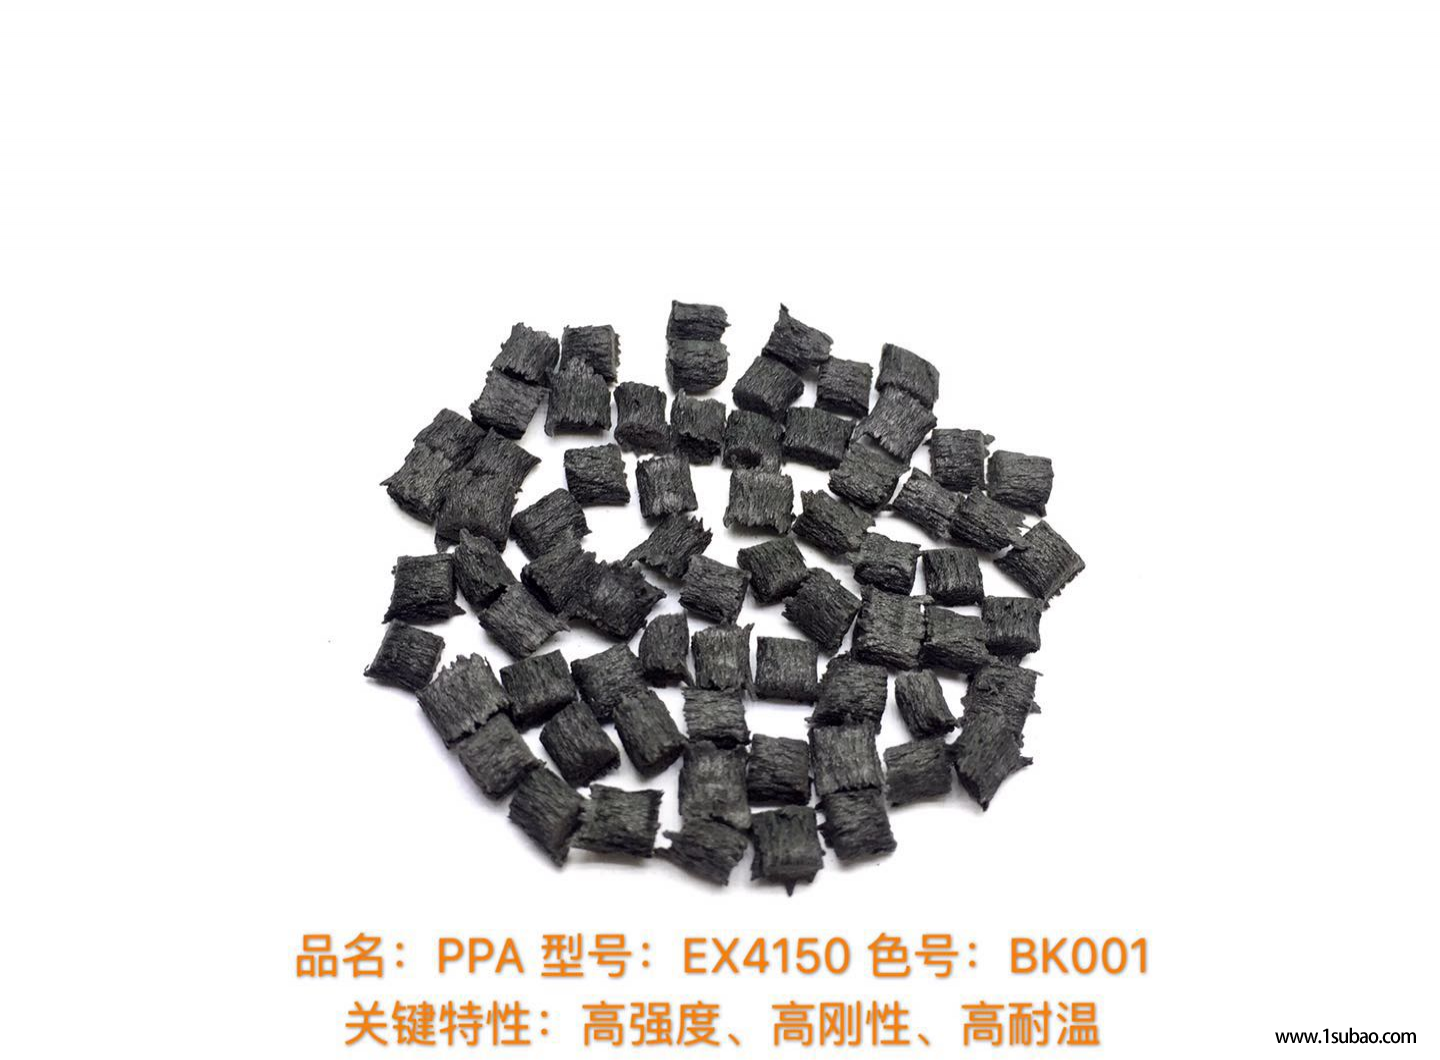 PPA东莞荣创塑料 EX4150 BK002 耐高温复合尼龙改性塑料